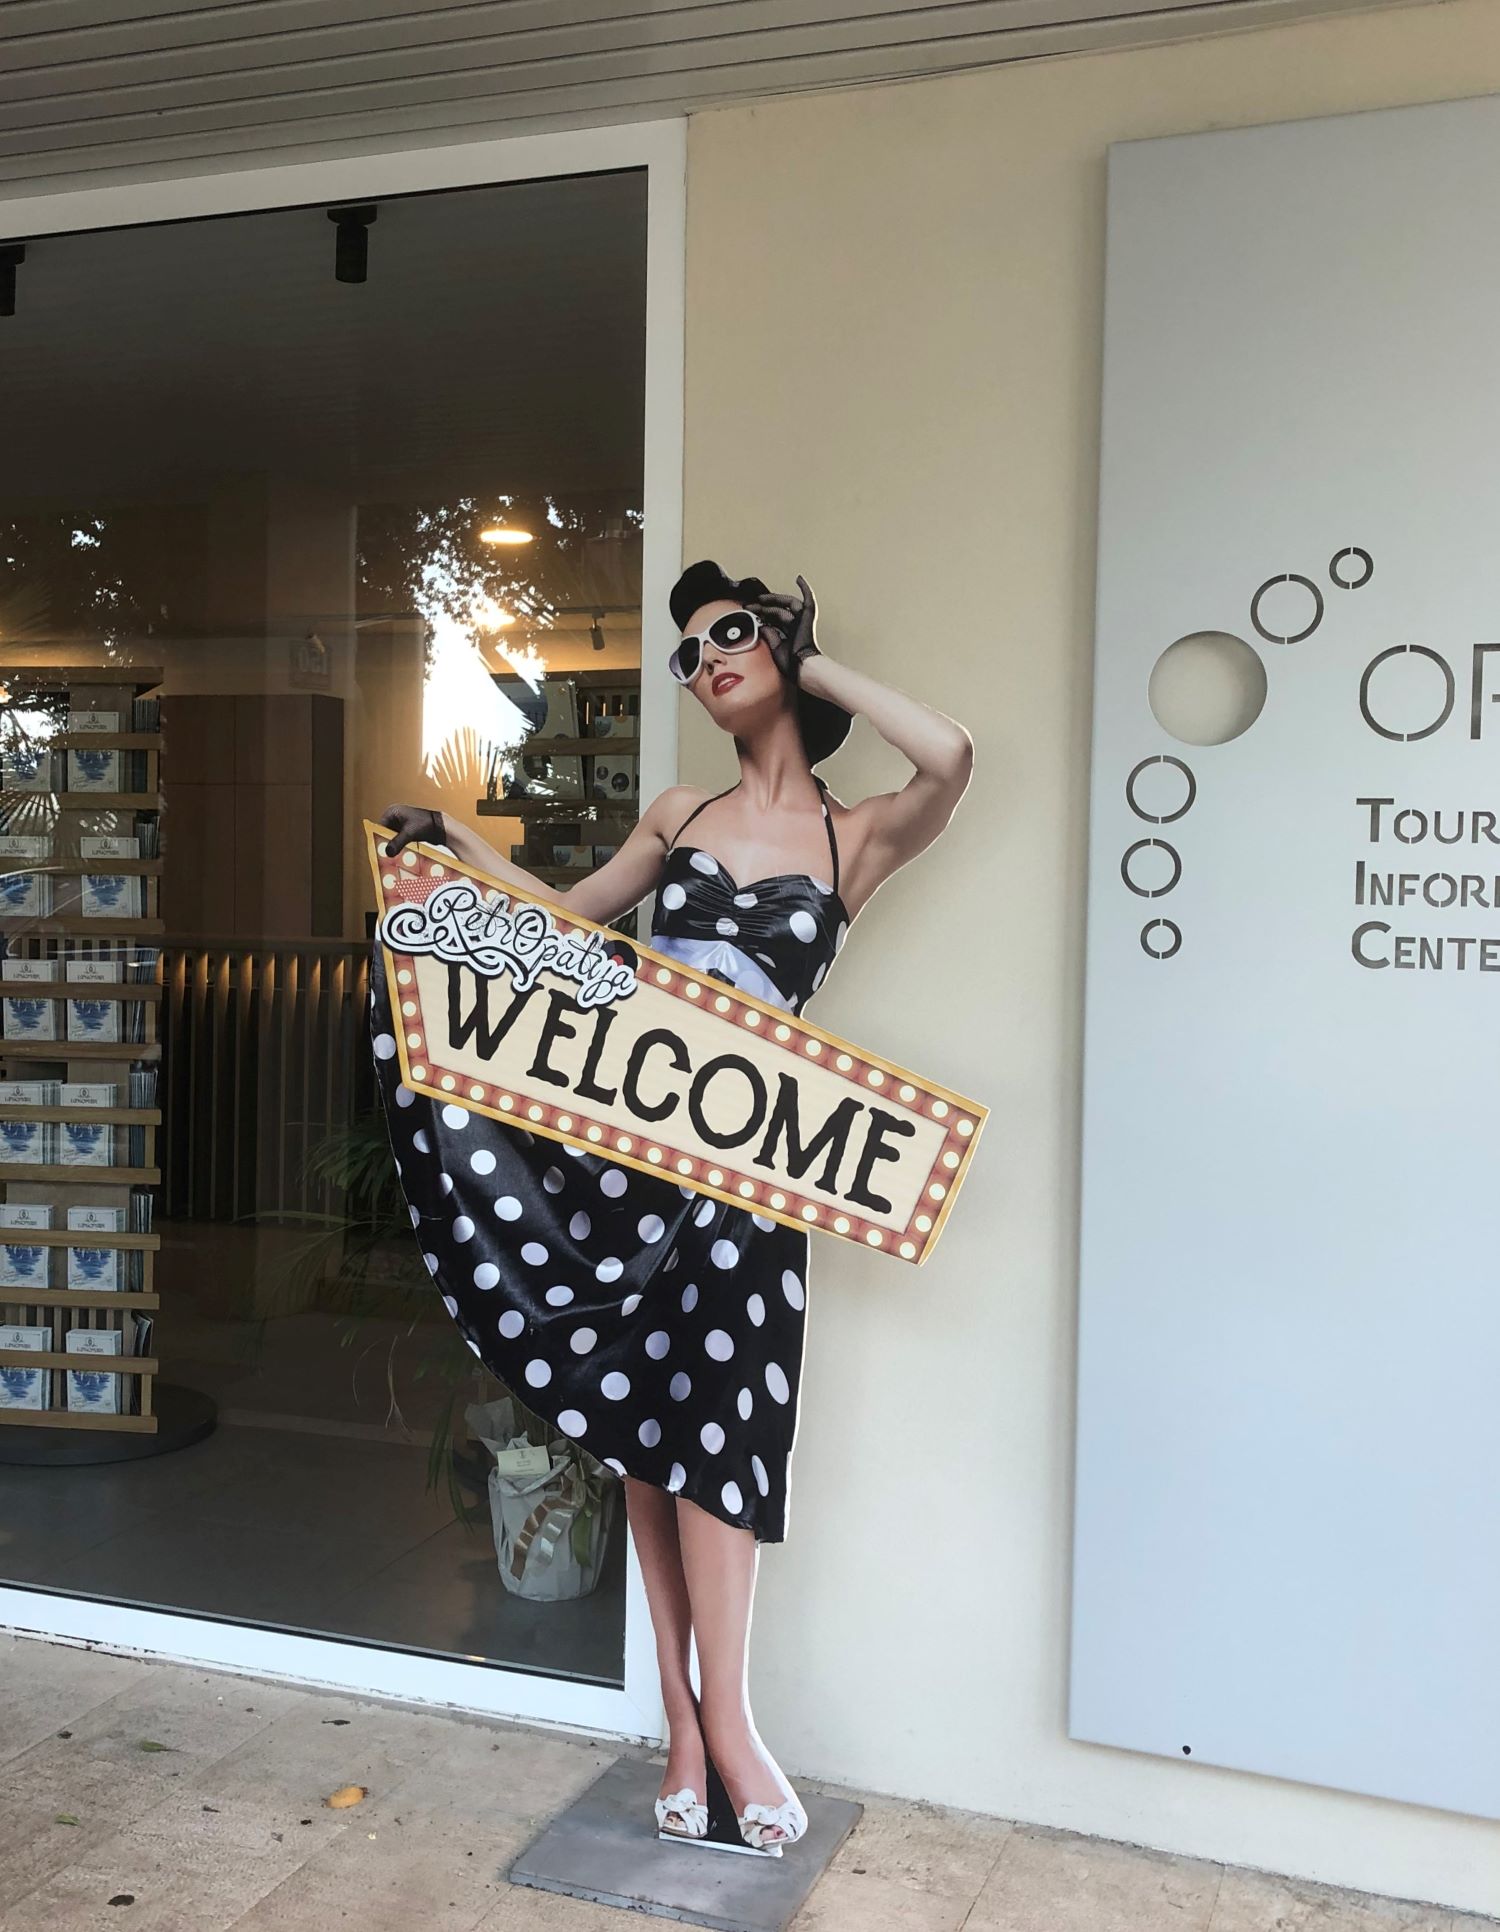 Schaufensterpuppe mit Welcome Schild in Opatija Kroatien